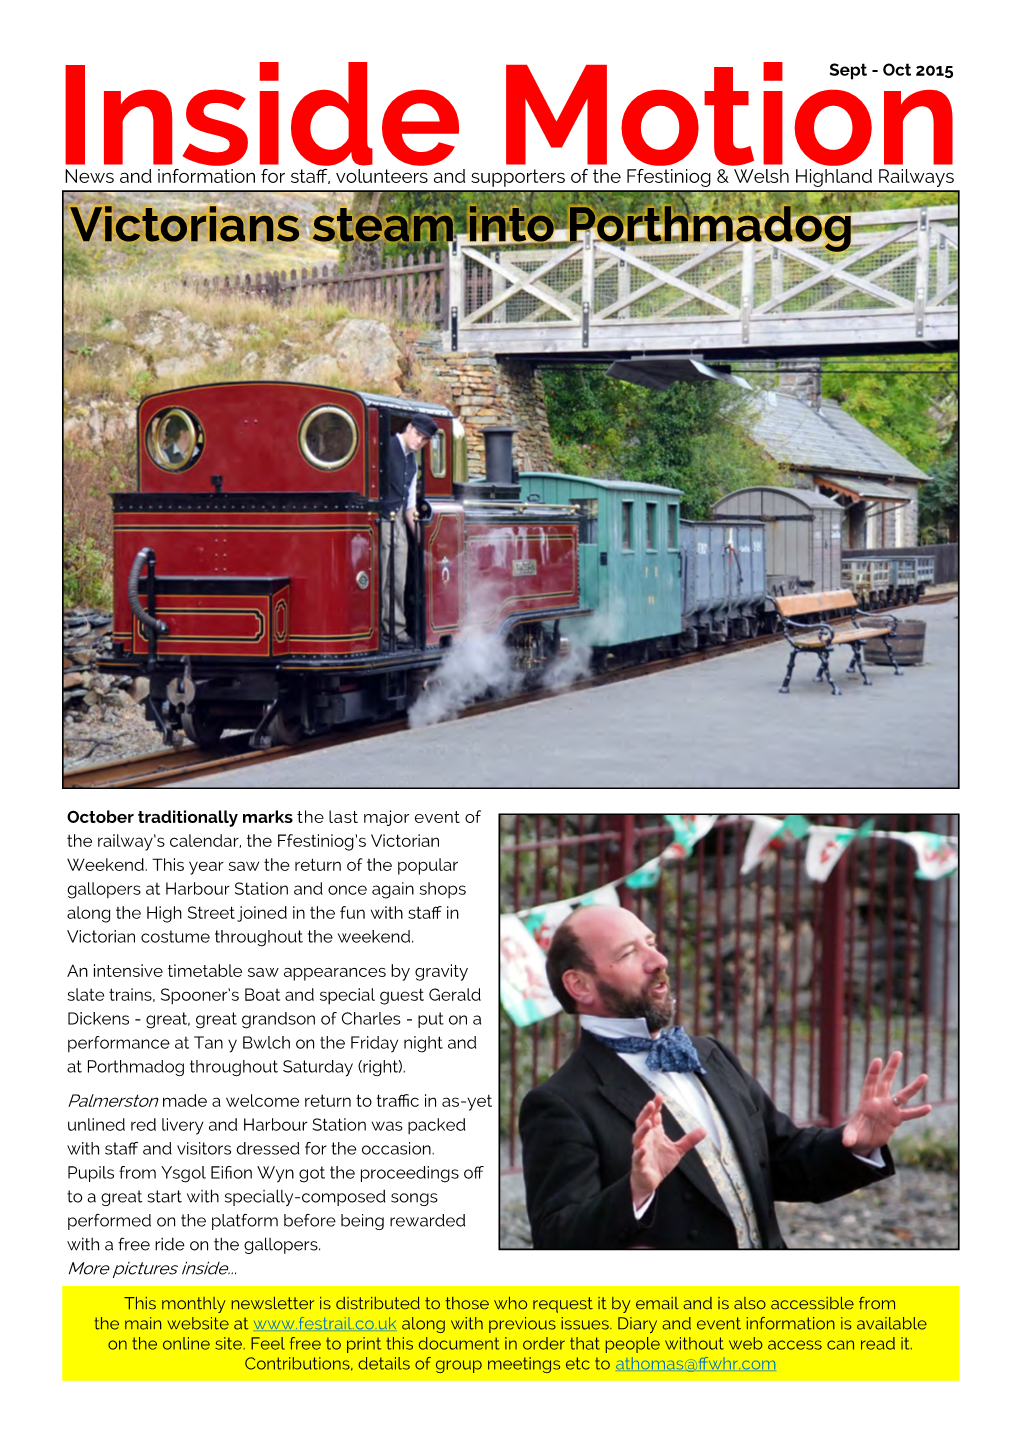 Victorians Steam Into Porthmadog